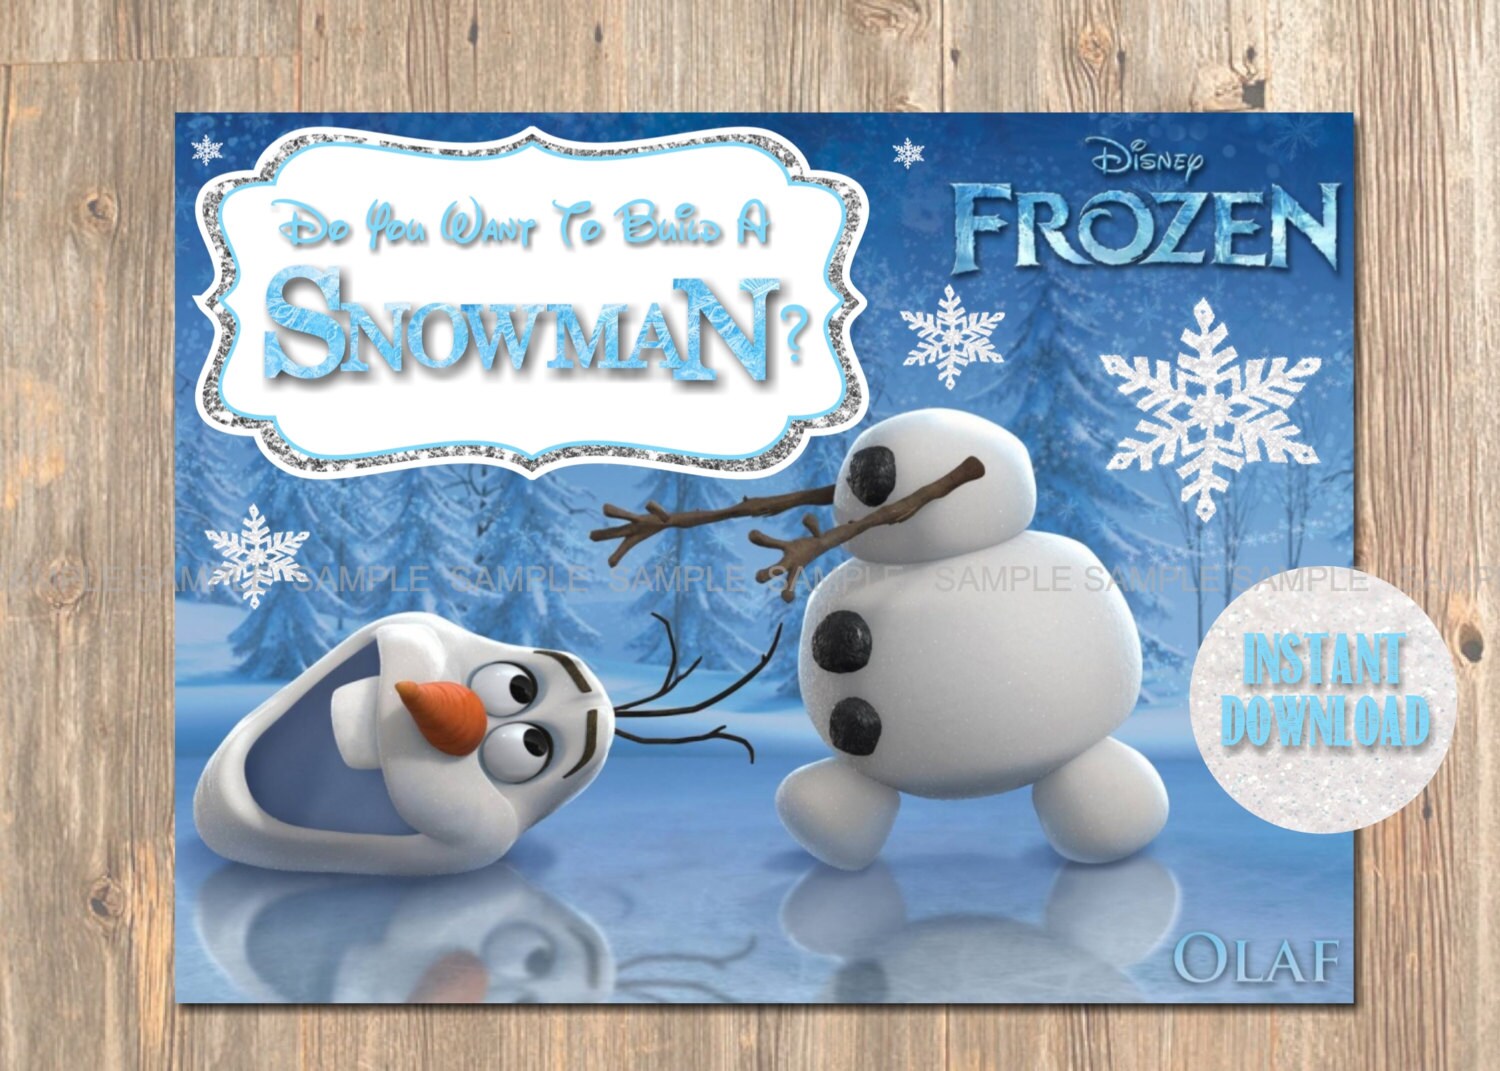 Do you wanna build a snowman OLAF Sign Disney's Frozen